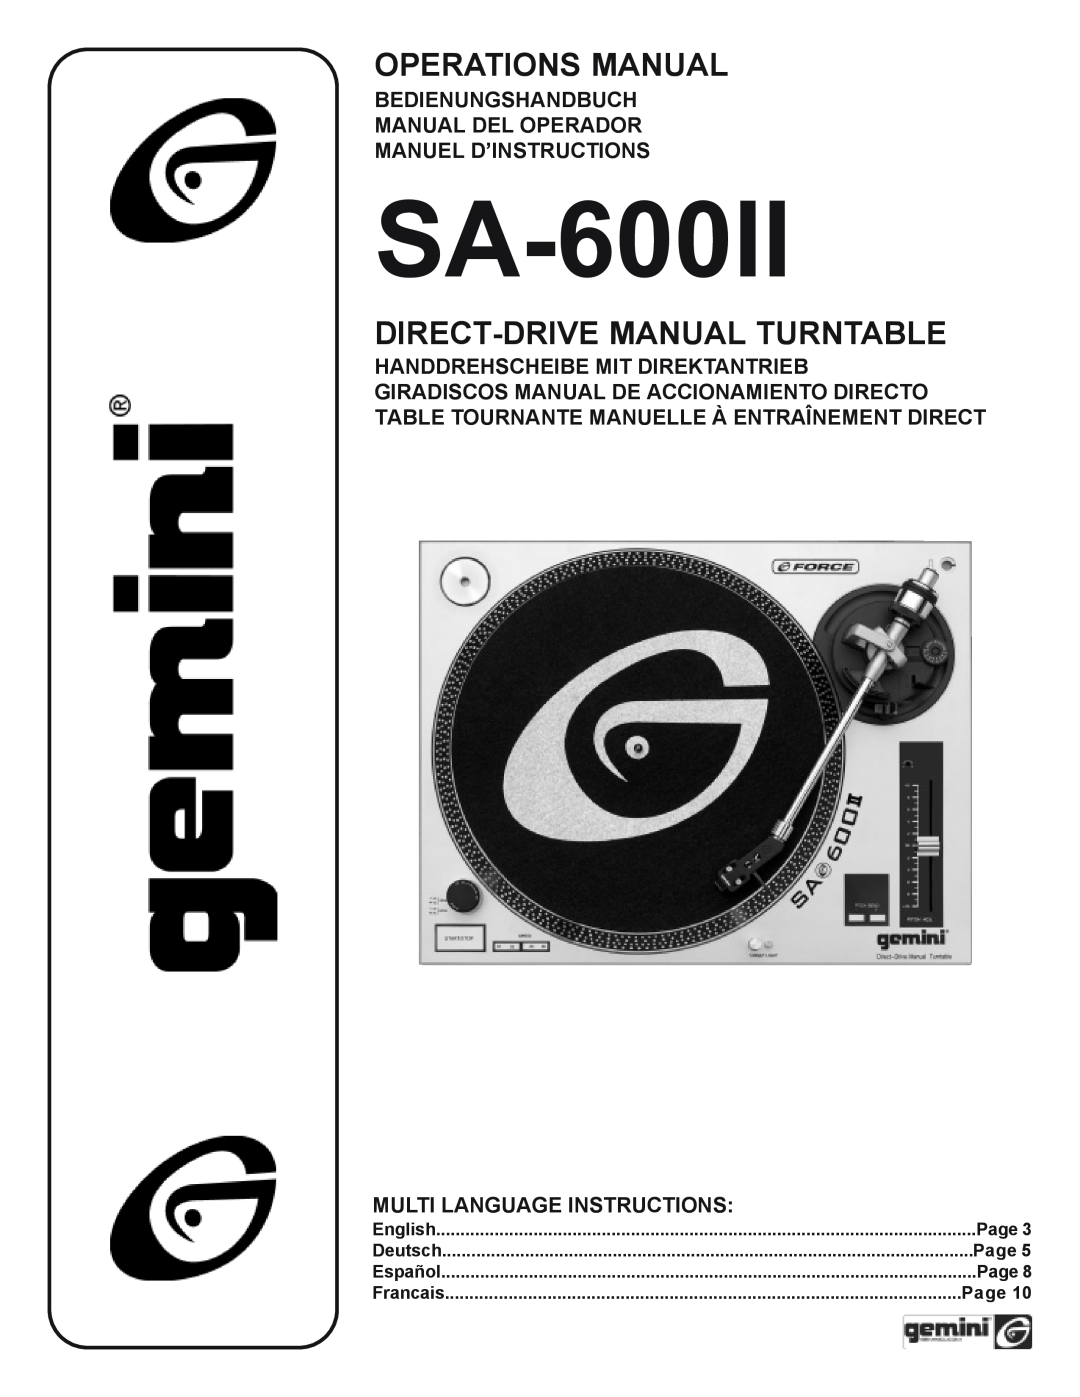 Gemini SA-600II manual Bedienungshandbuch Manual Del Operador, Manuel D’Instructions, Multi Language Instructions, Page 